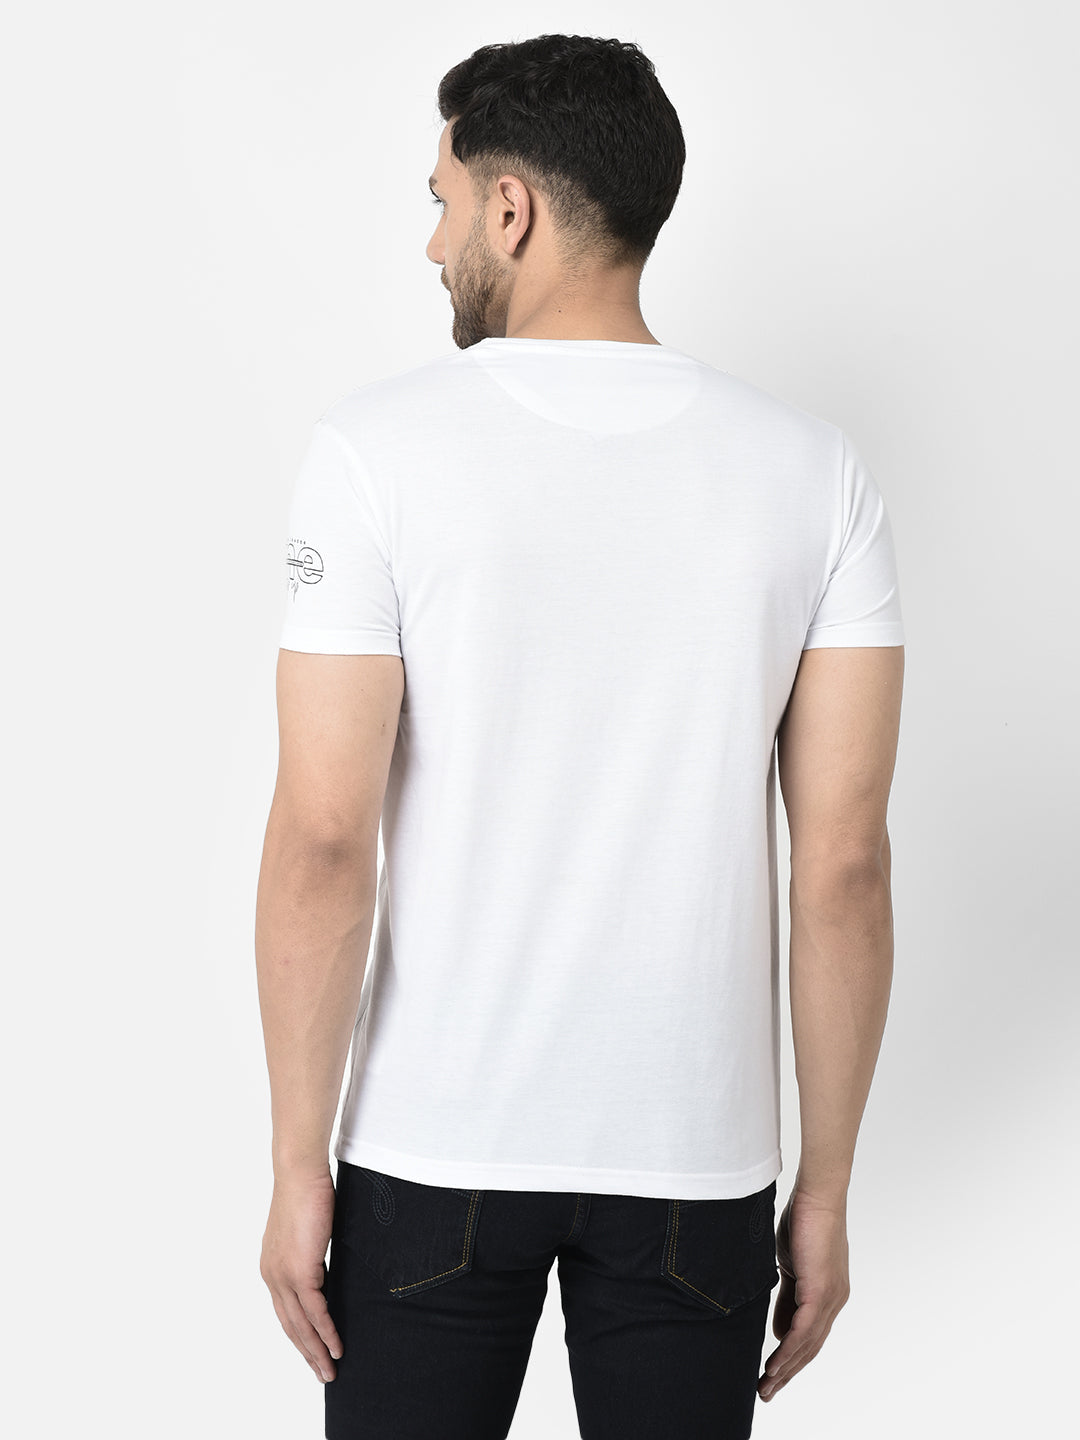 Cobb White Printed Regular Fit T-Shirt